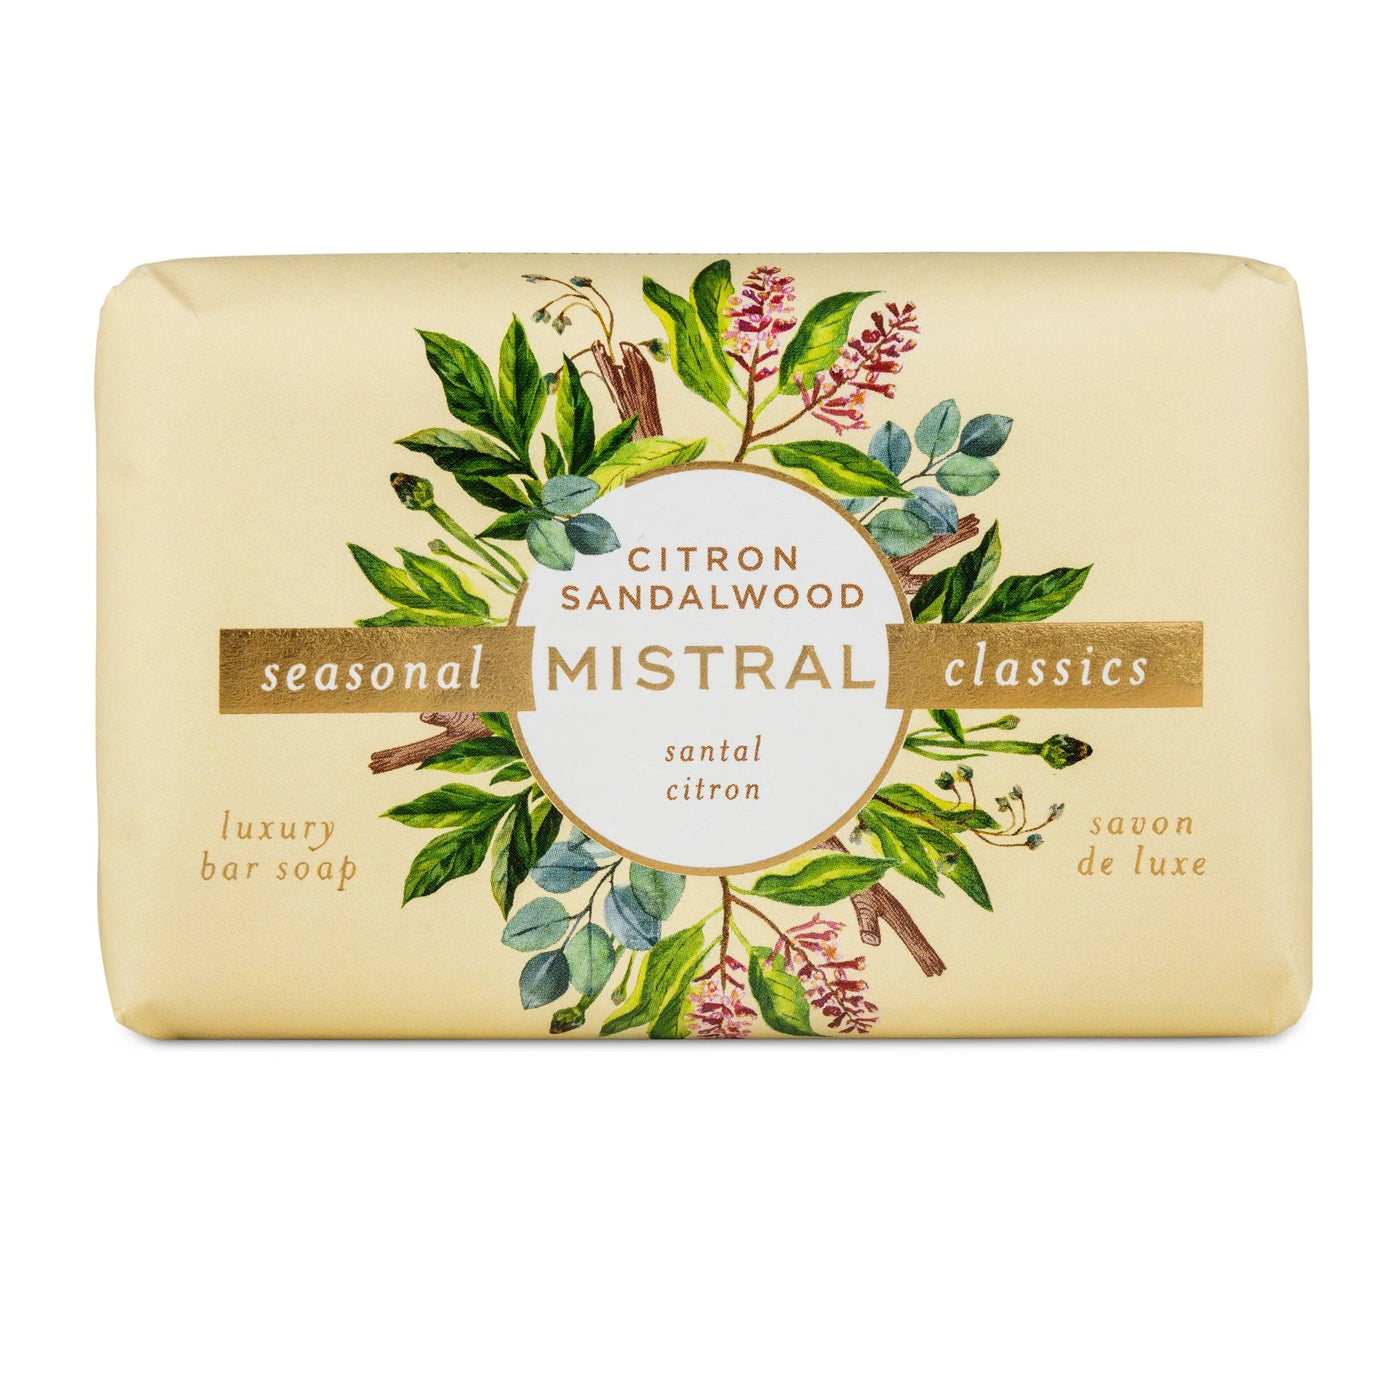 Mistral CITRON SANTAL SEASONAL CLASSIC BAR SOAP - Women's